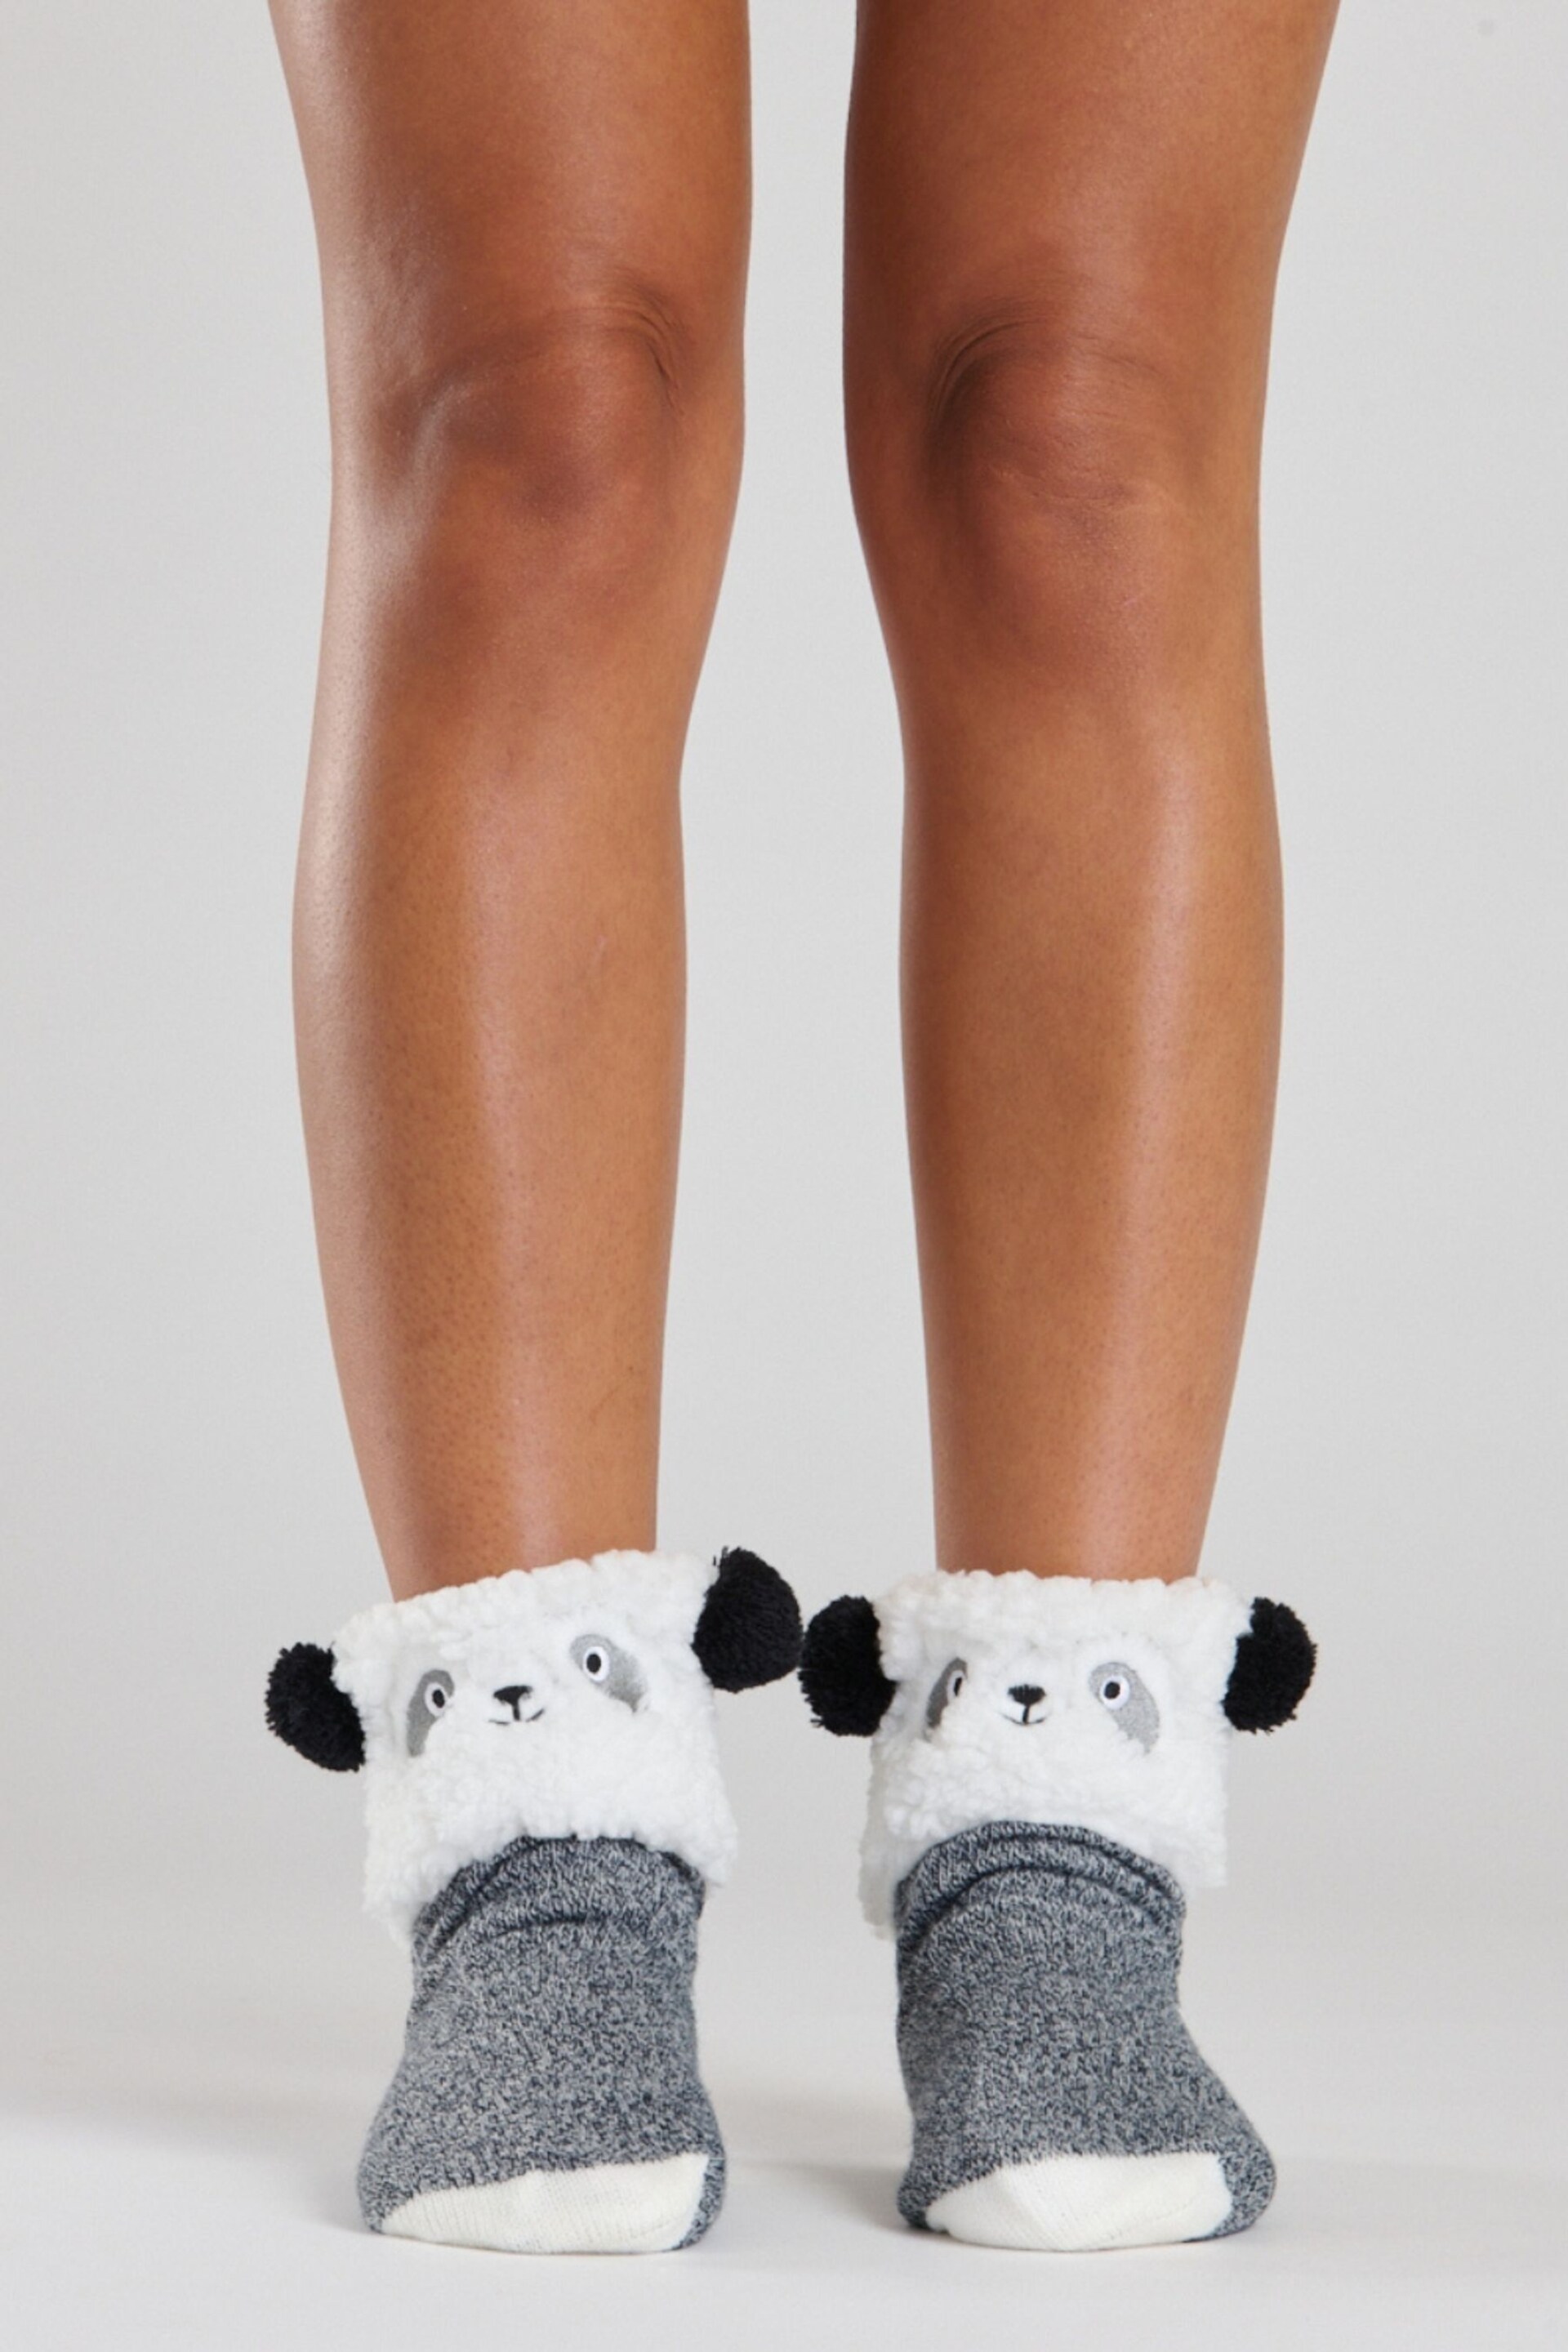 Loungeable Grey Panda Knit Socks - Image 2 of 2